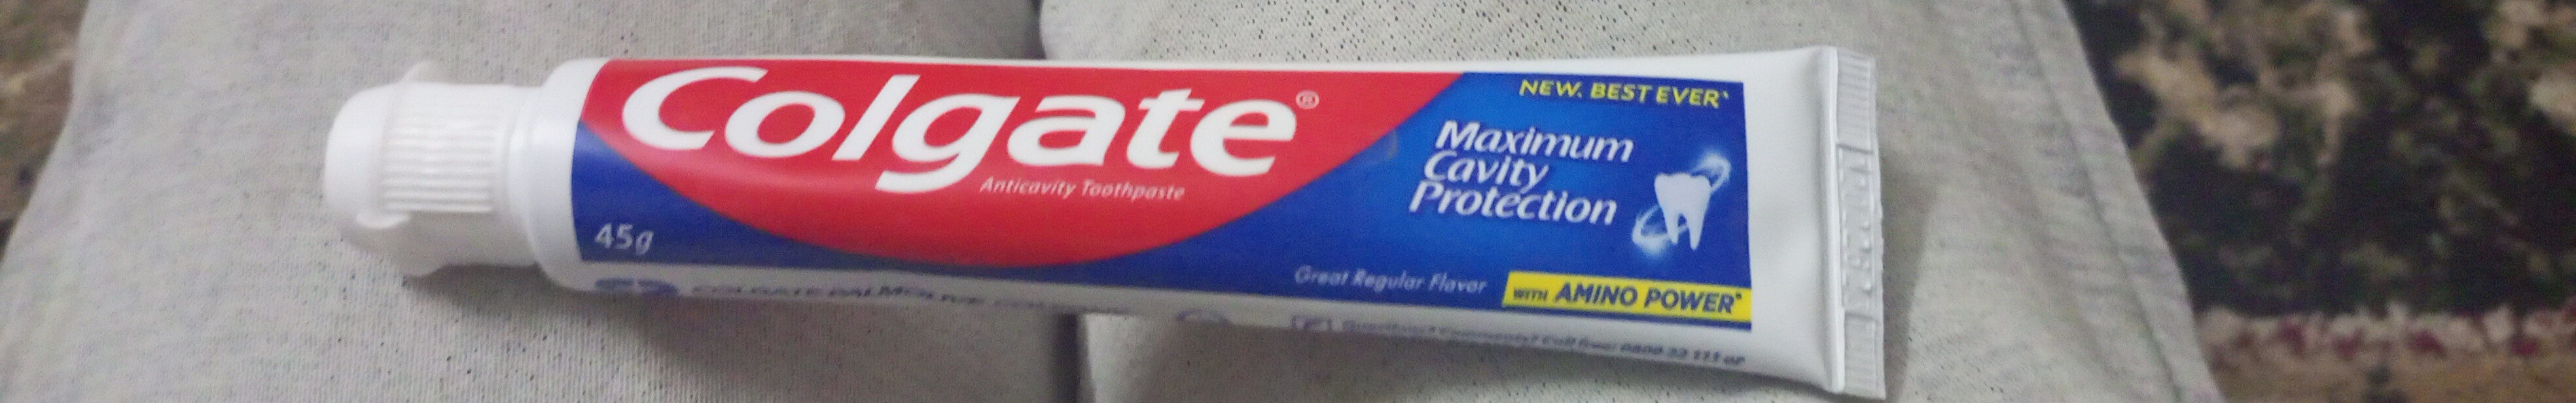 Colgate anticavity toothpaste - Produkt - en